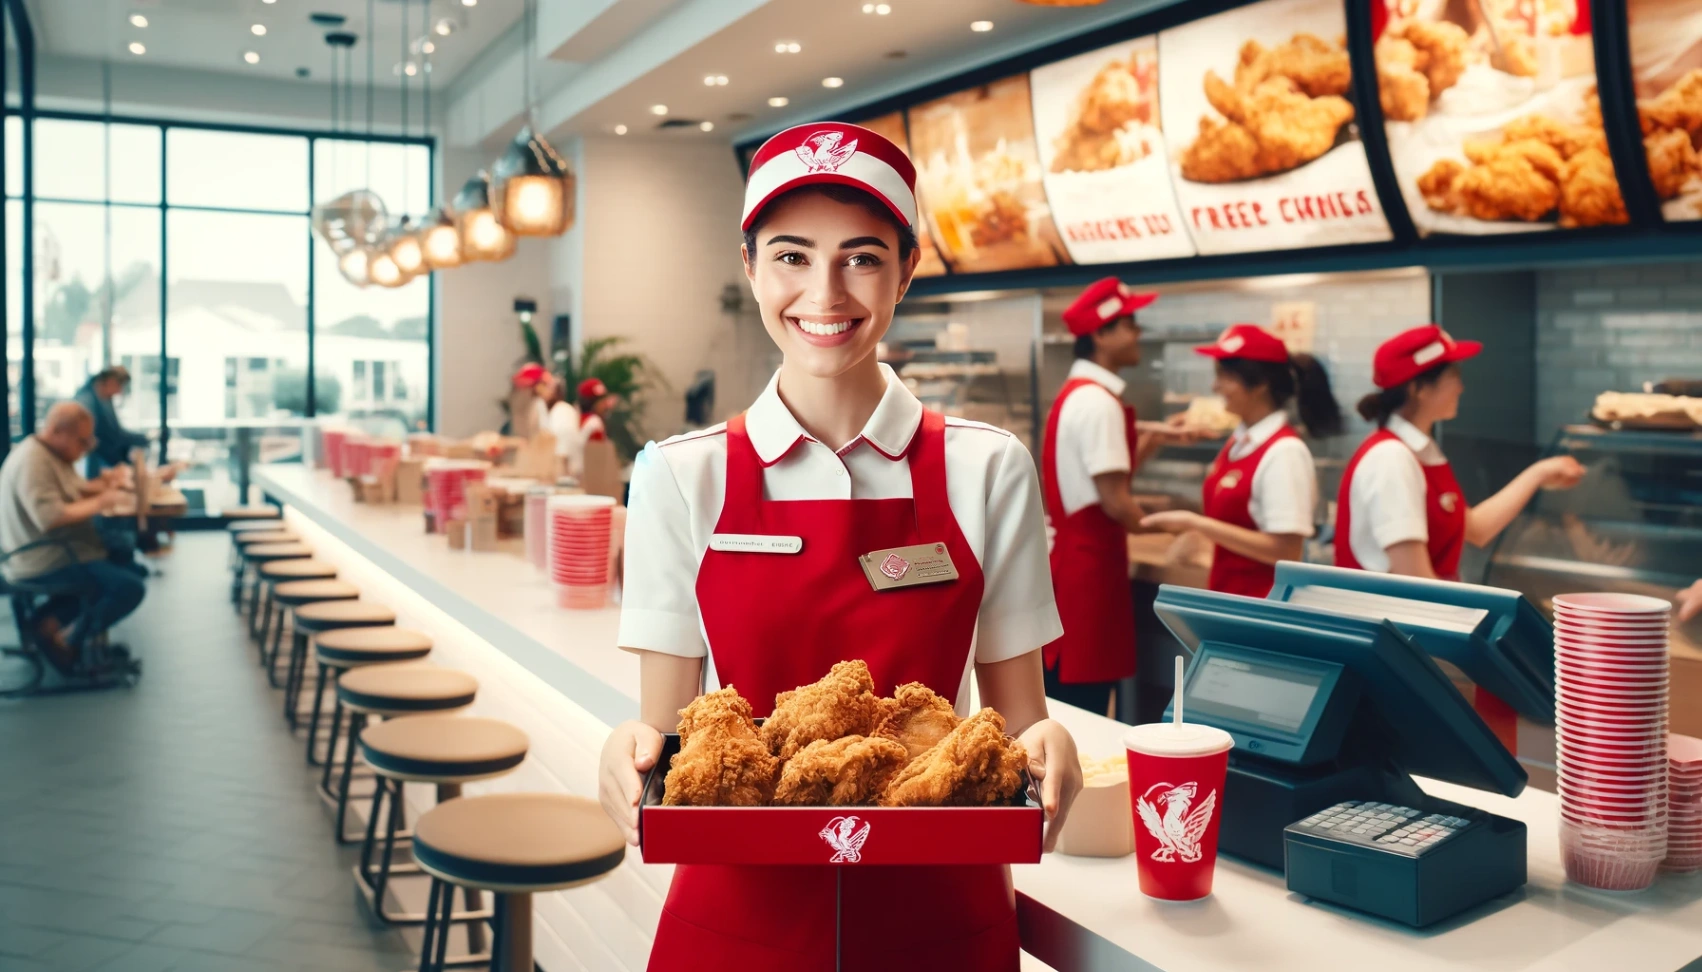 KFC - למדו כיצד להגיש מועמדות למשרות היום